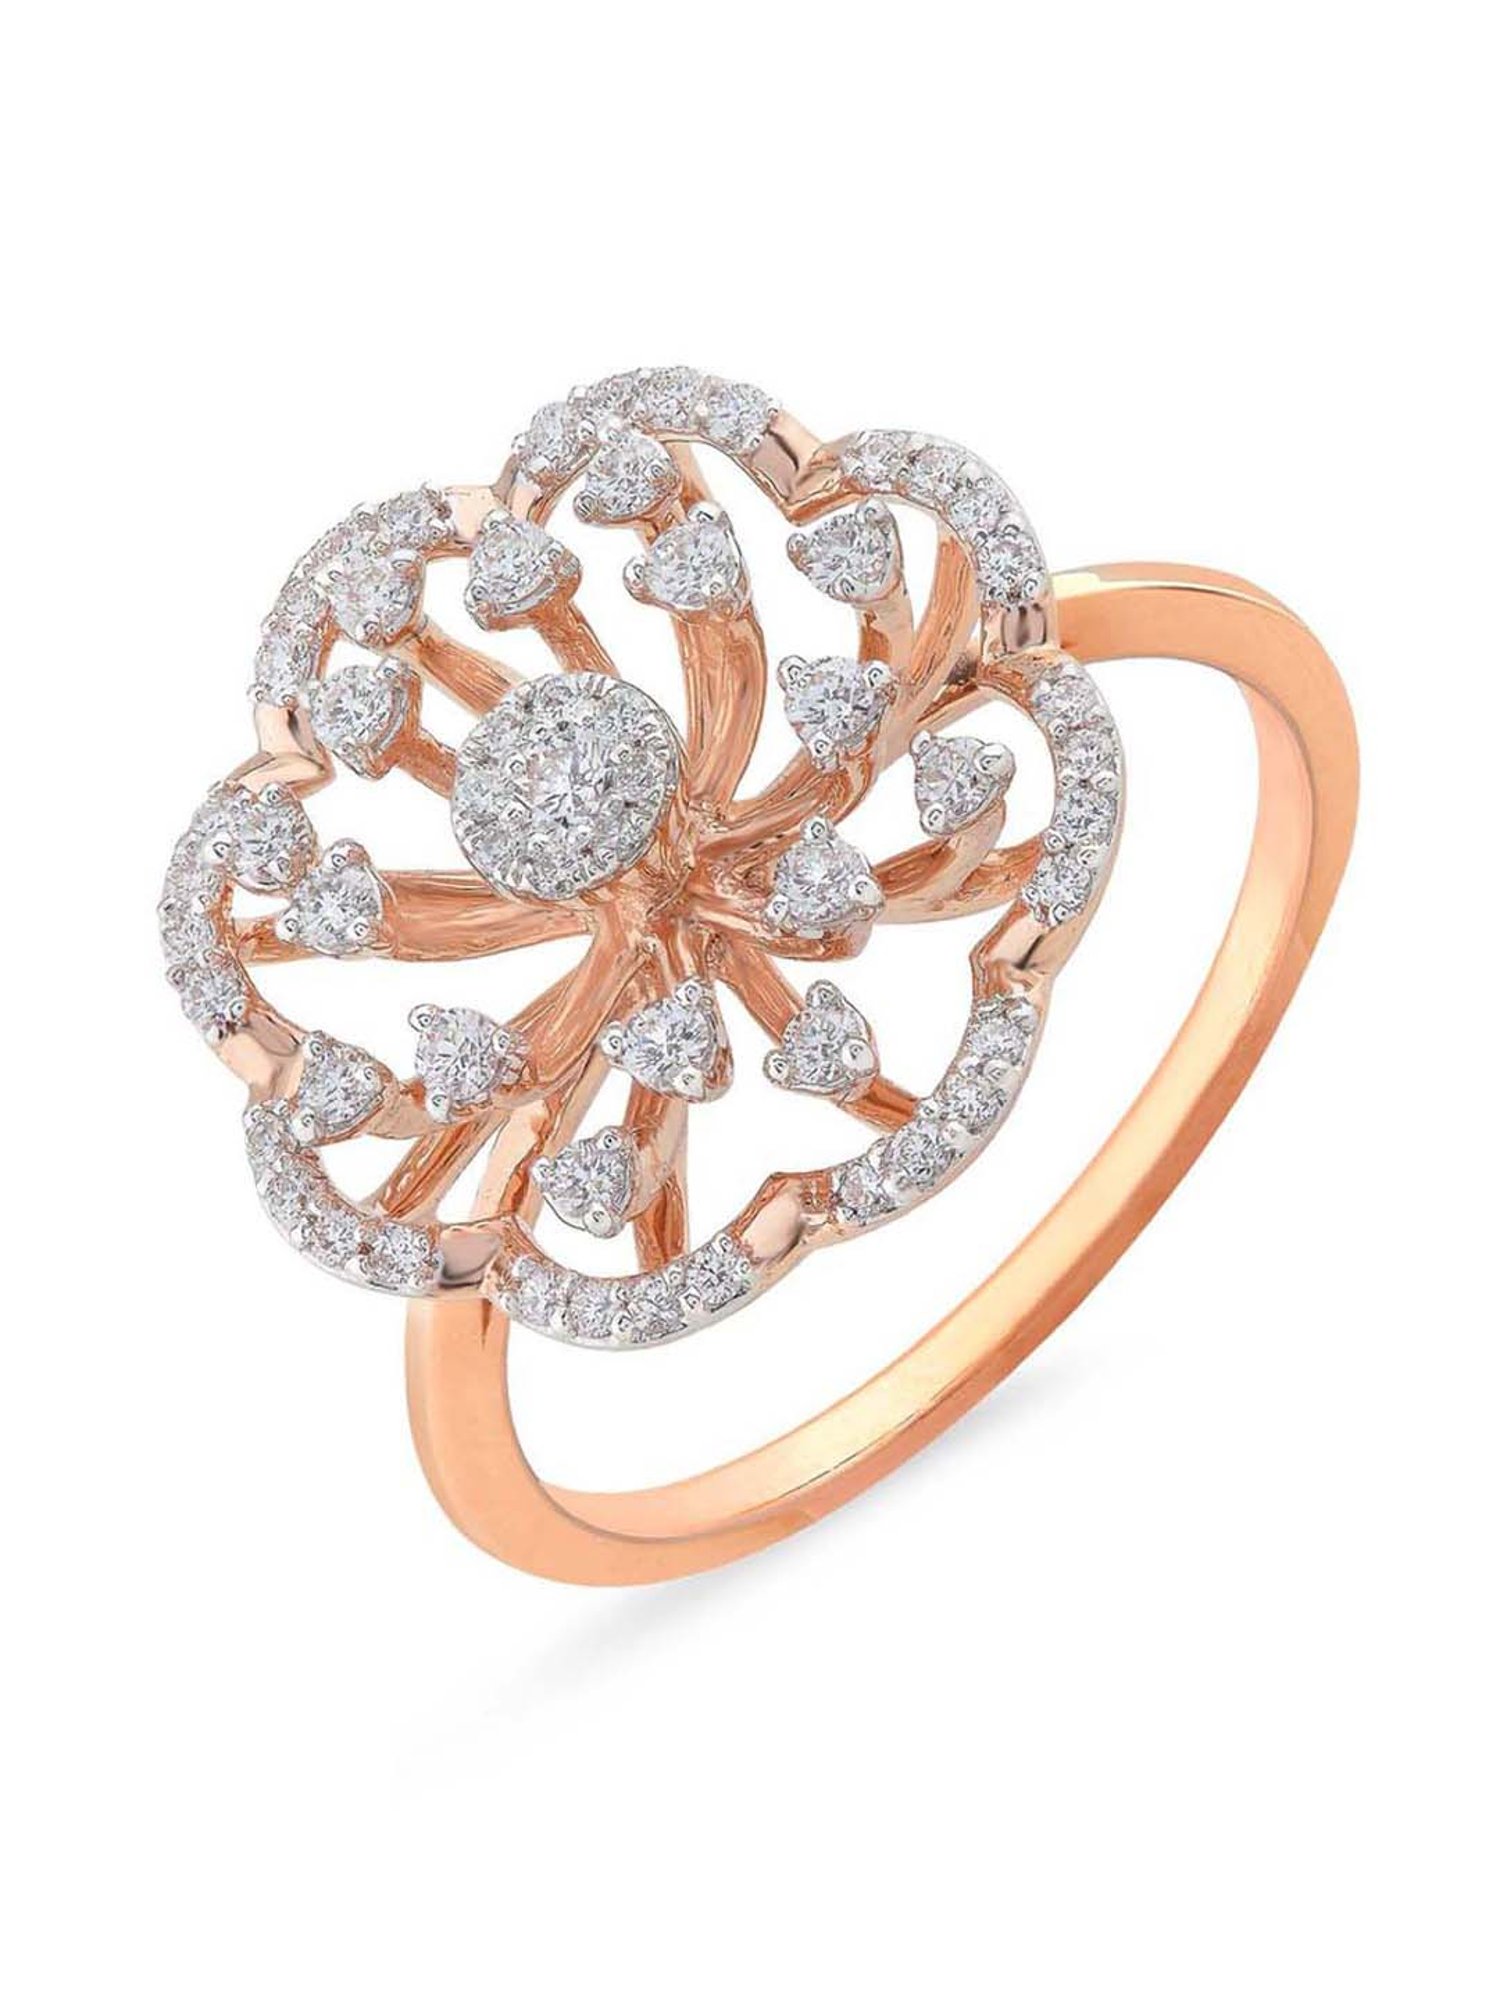 Senco Gold & Diamonds Single Diamond Ring : Amazon.in: Jewellery